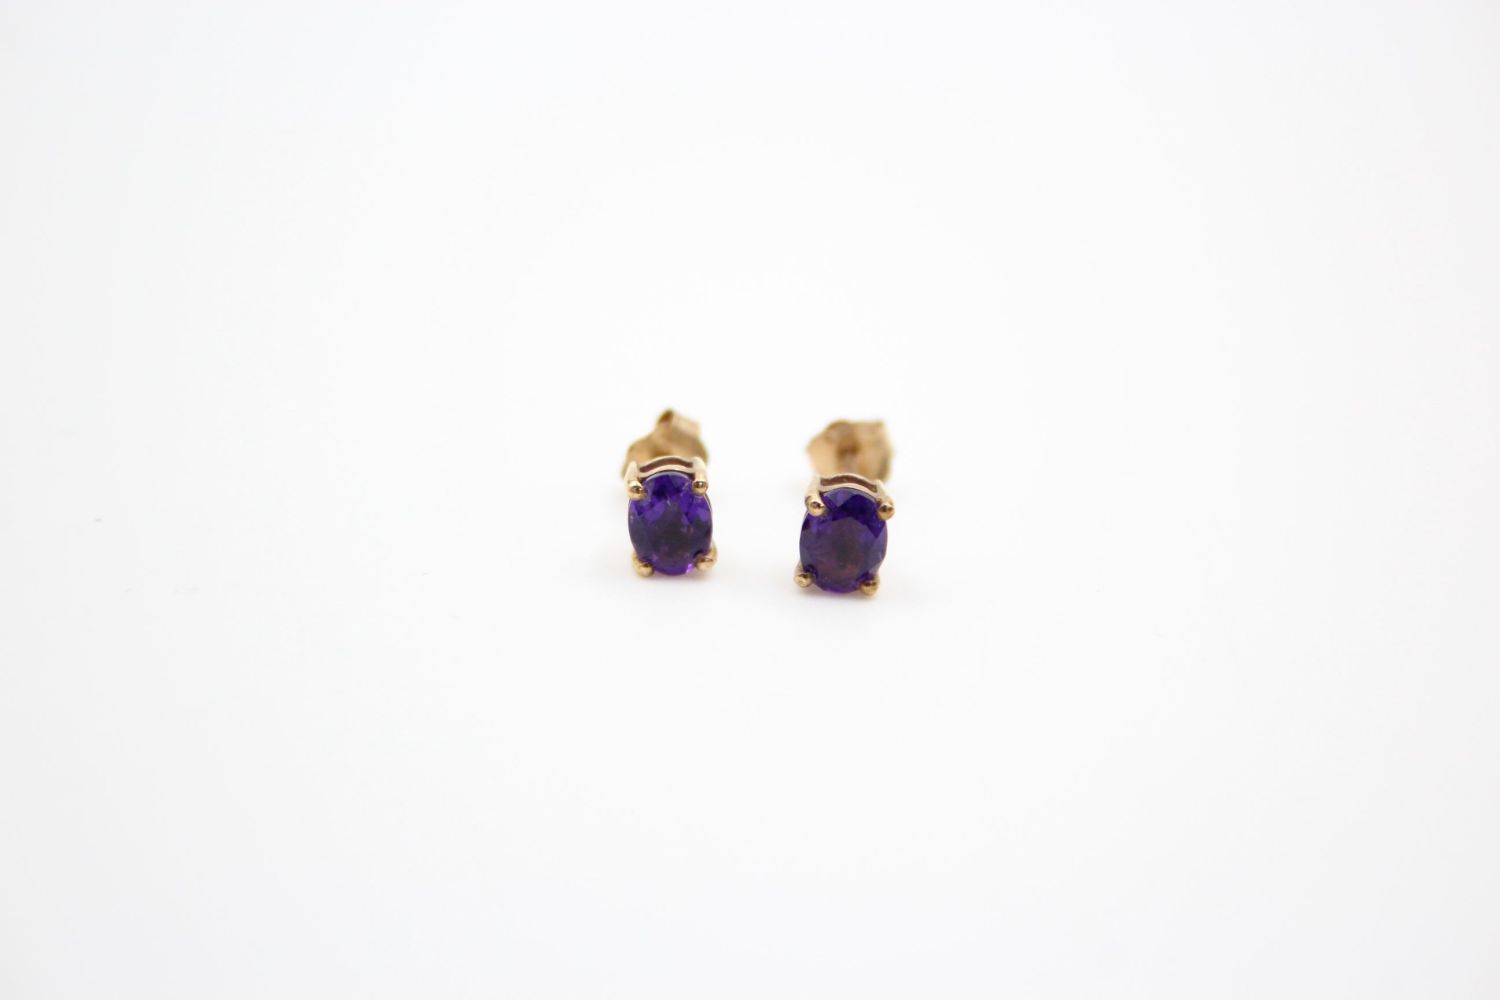 3 x 9ct gold gemstone earrings 1.9 grams gross - Image 5 of 11